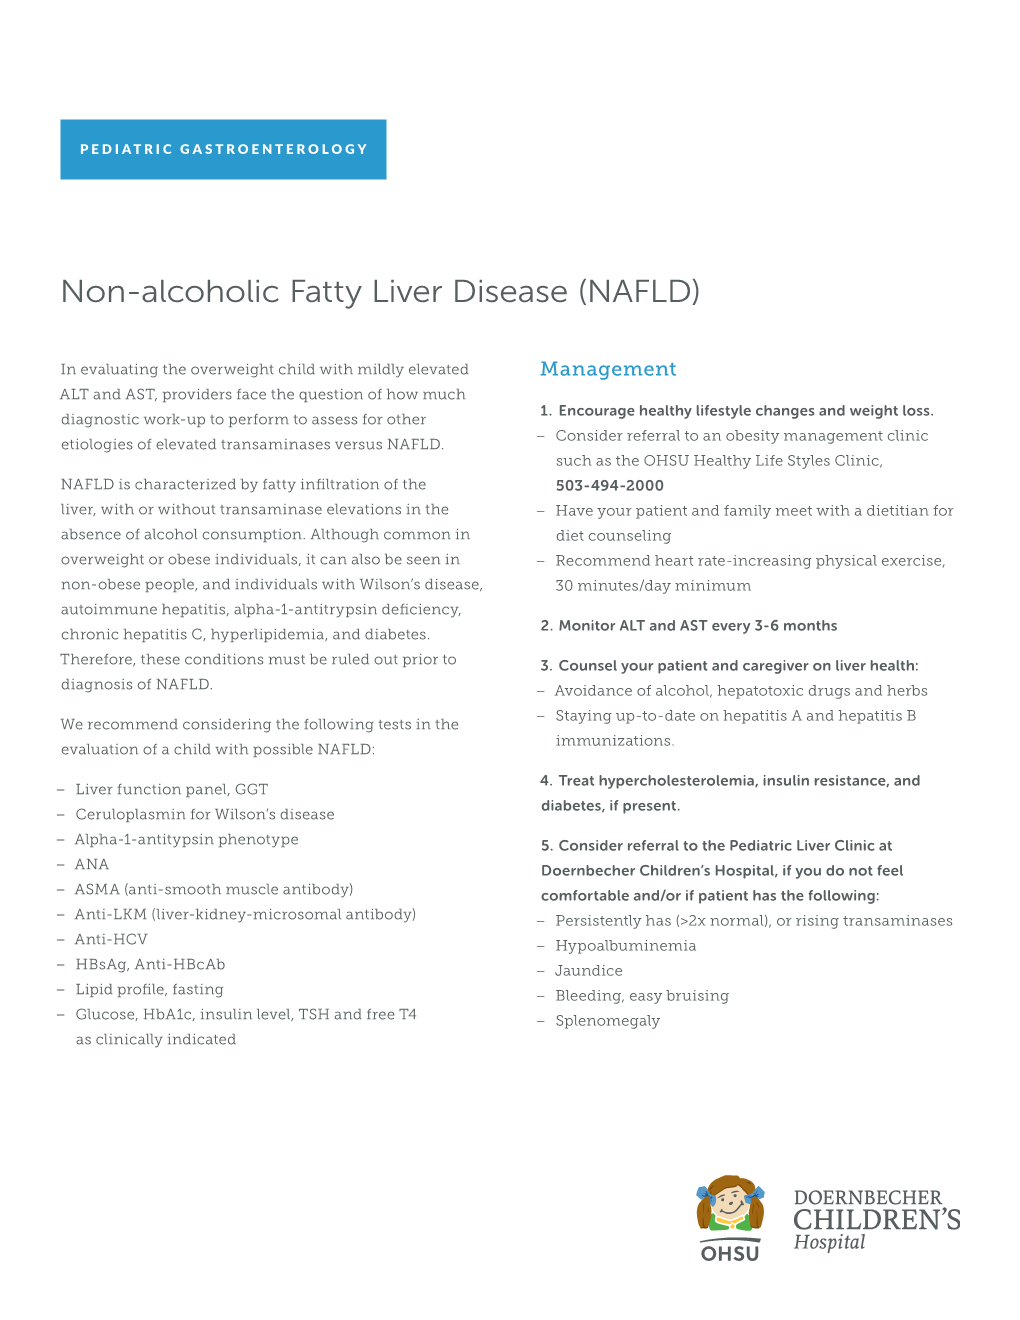 Non-Alcoholic Fatty Liver Disease (NAFLD)